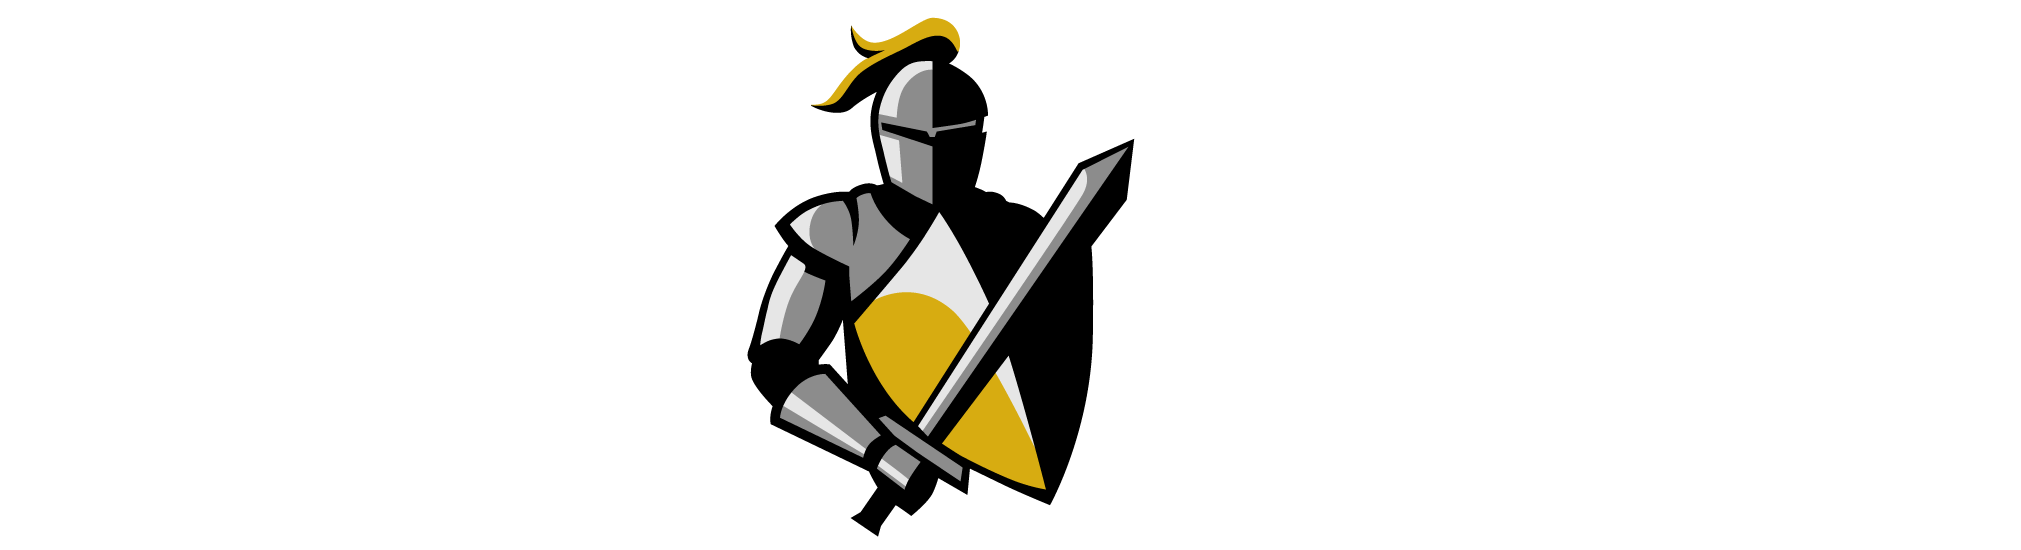 Black Knight Logo - Black Knight Mortgage Monitor